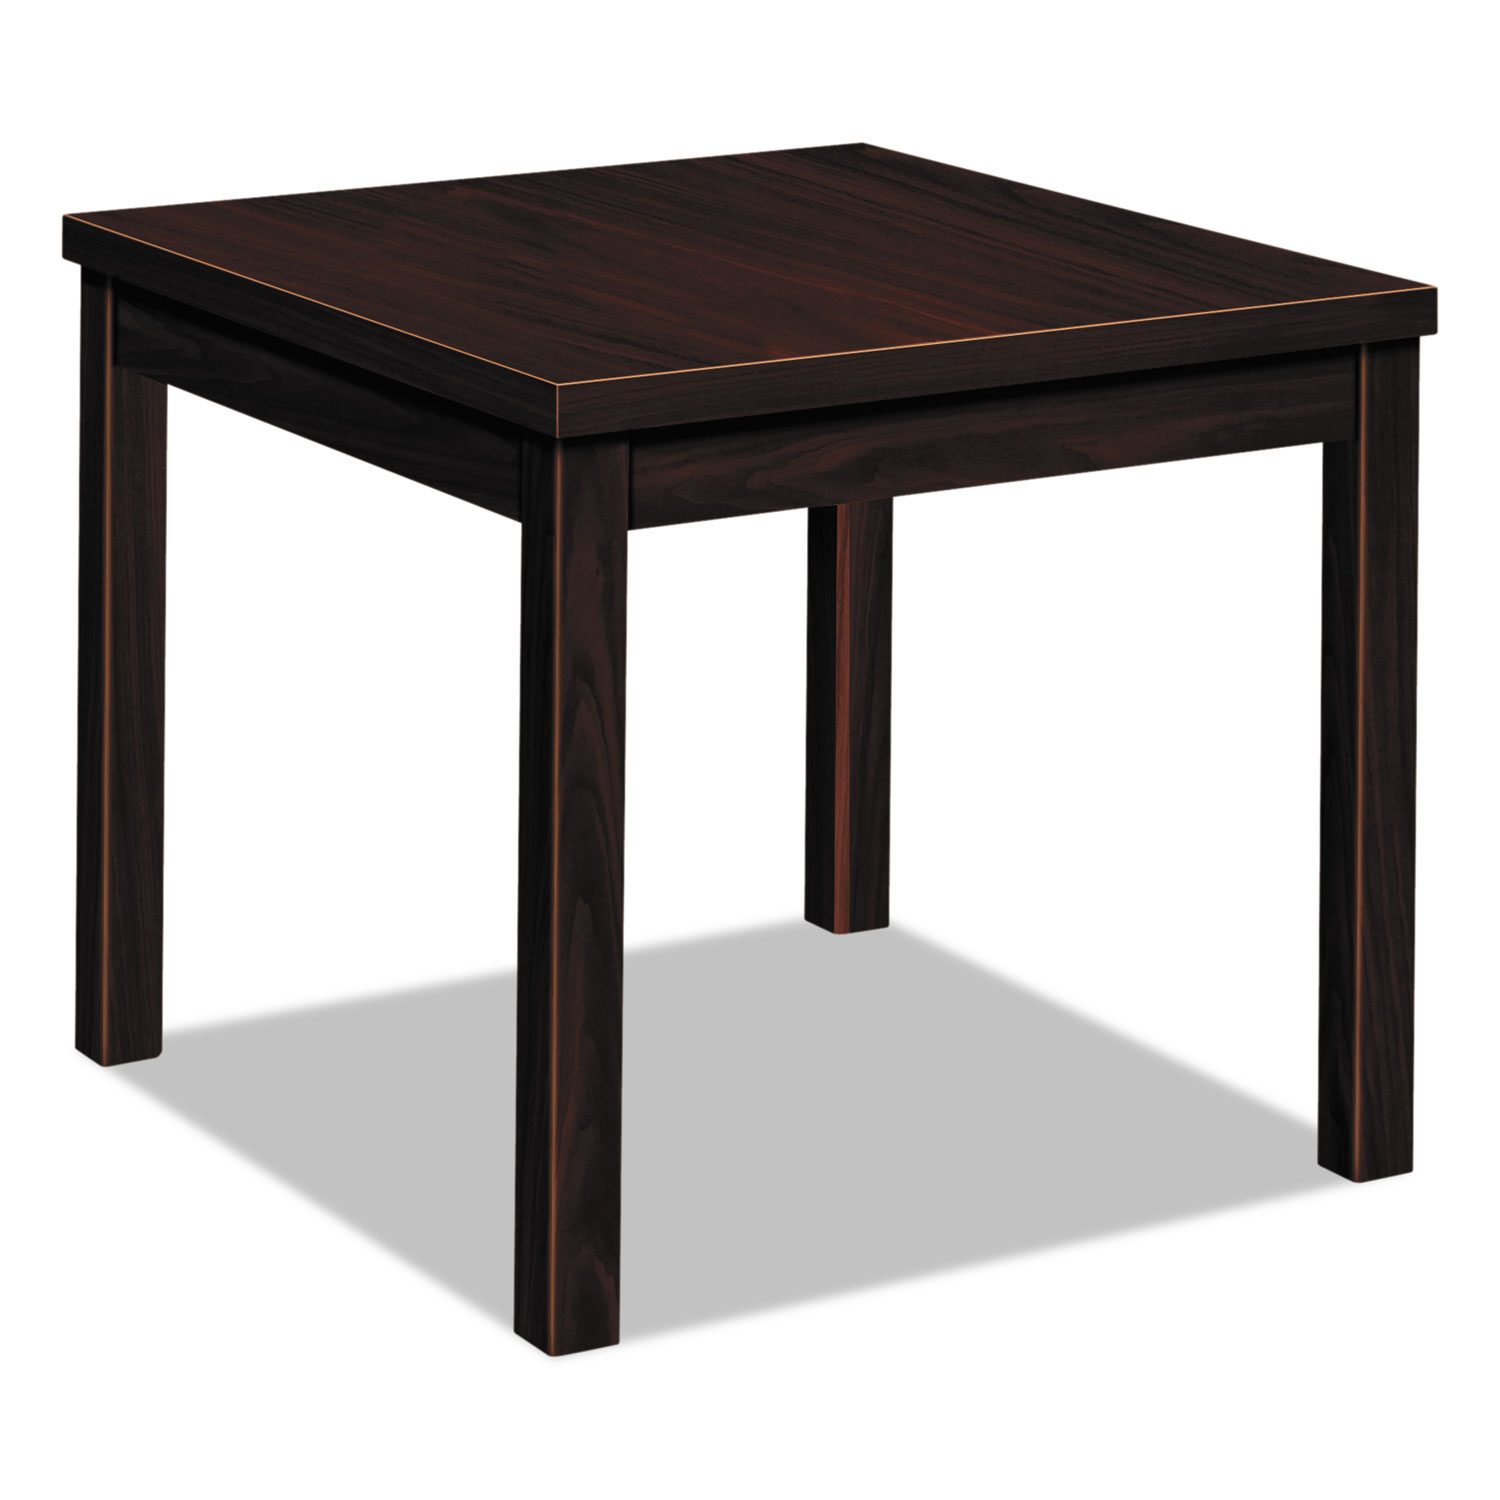  HON H80192.NN Laminate Occasional Table, Square, 24w x 24d x 20h, Mahogany (HON80192NN) 